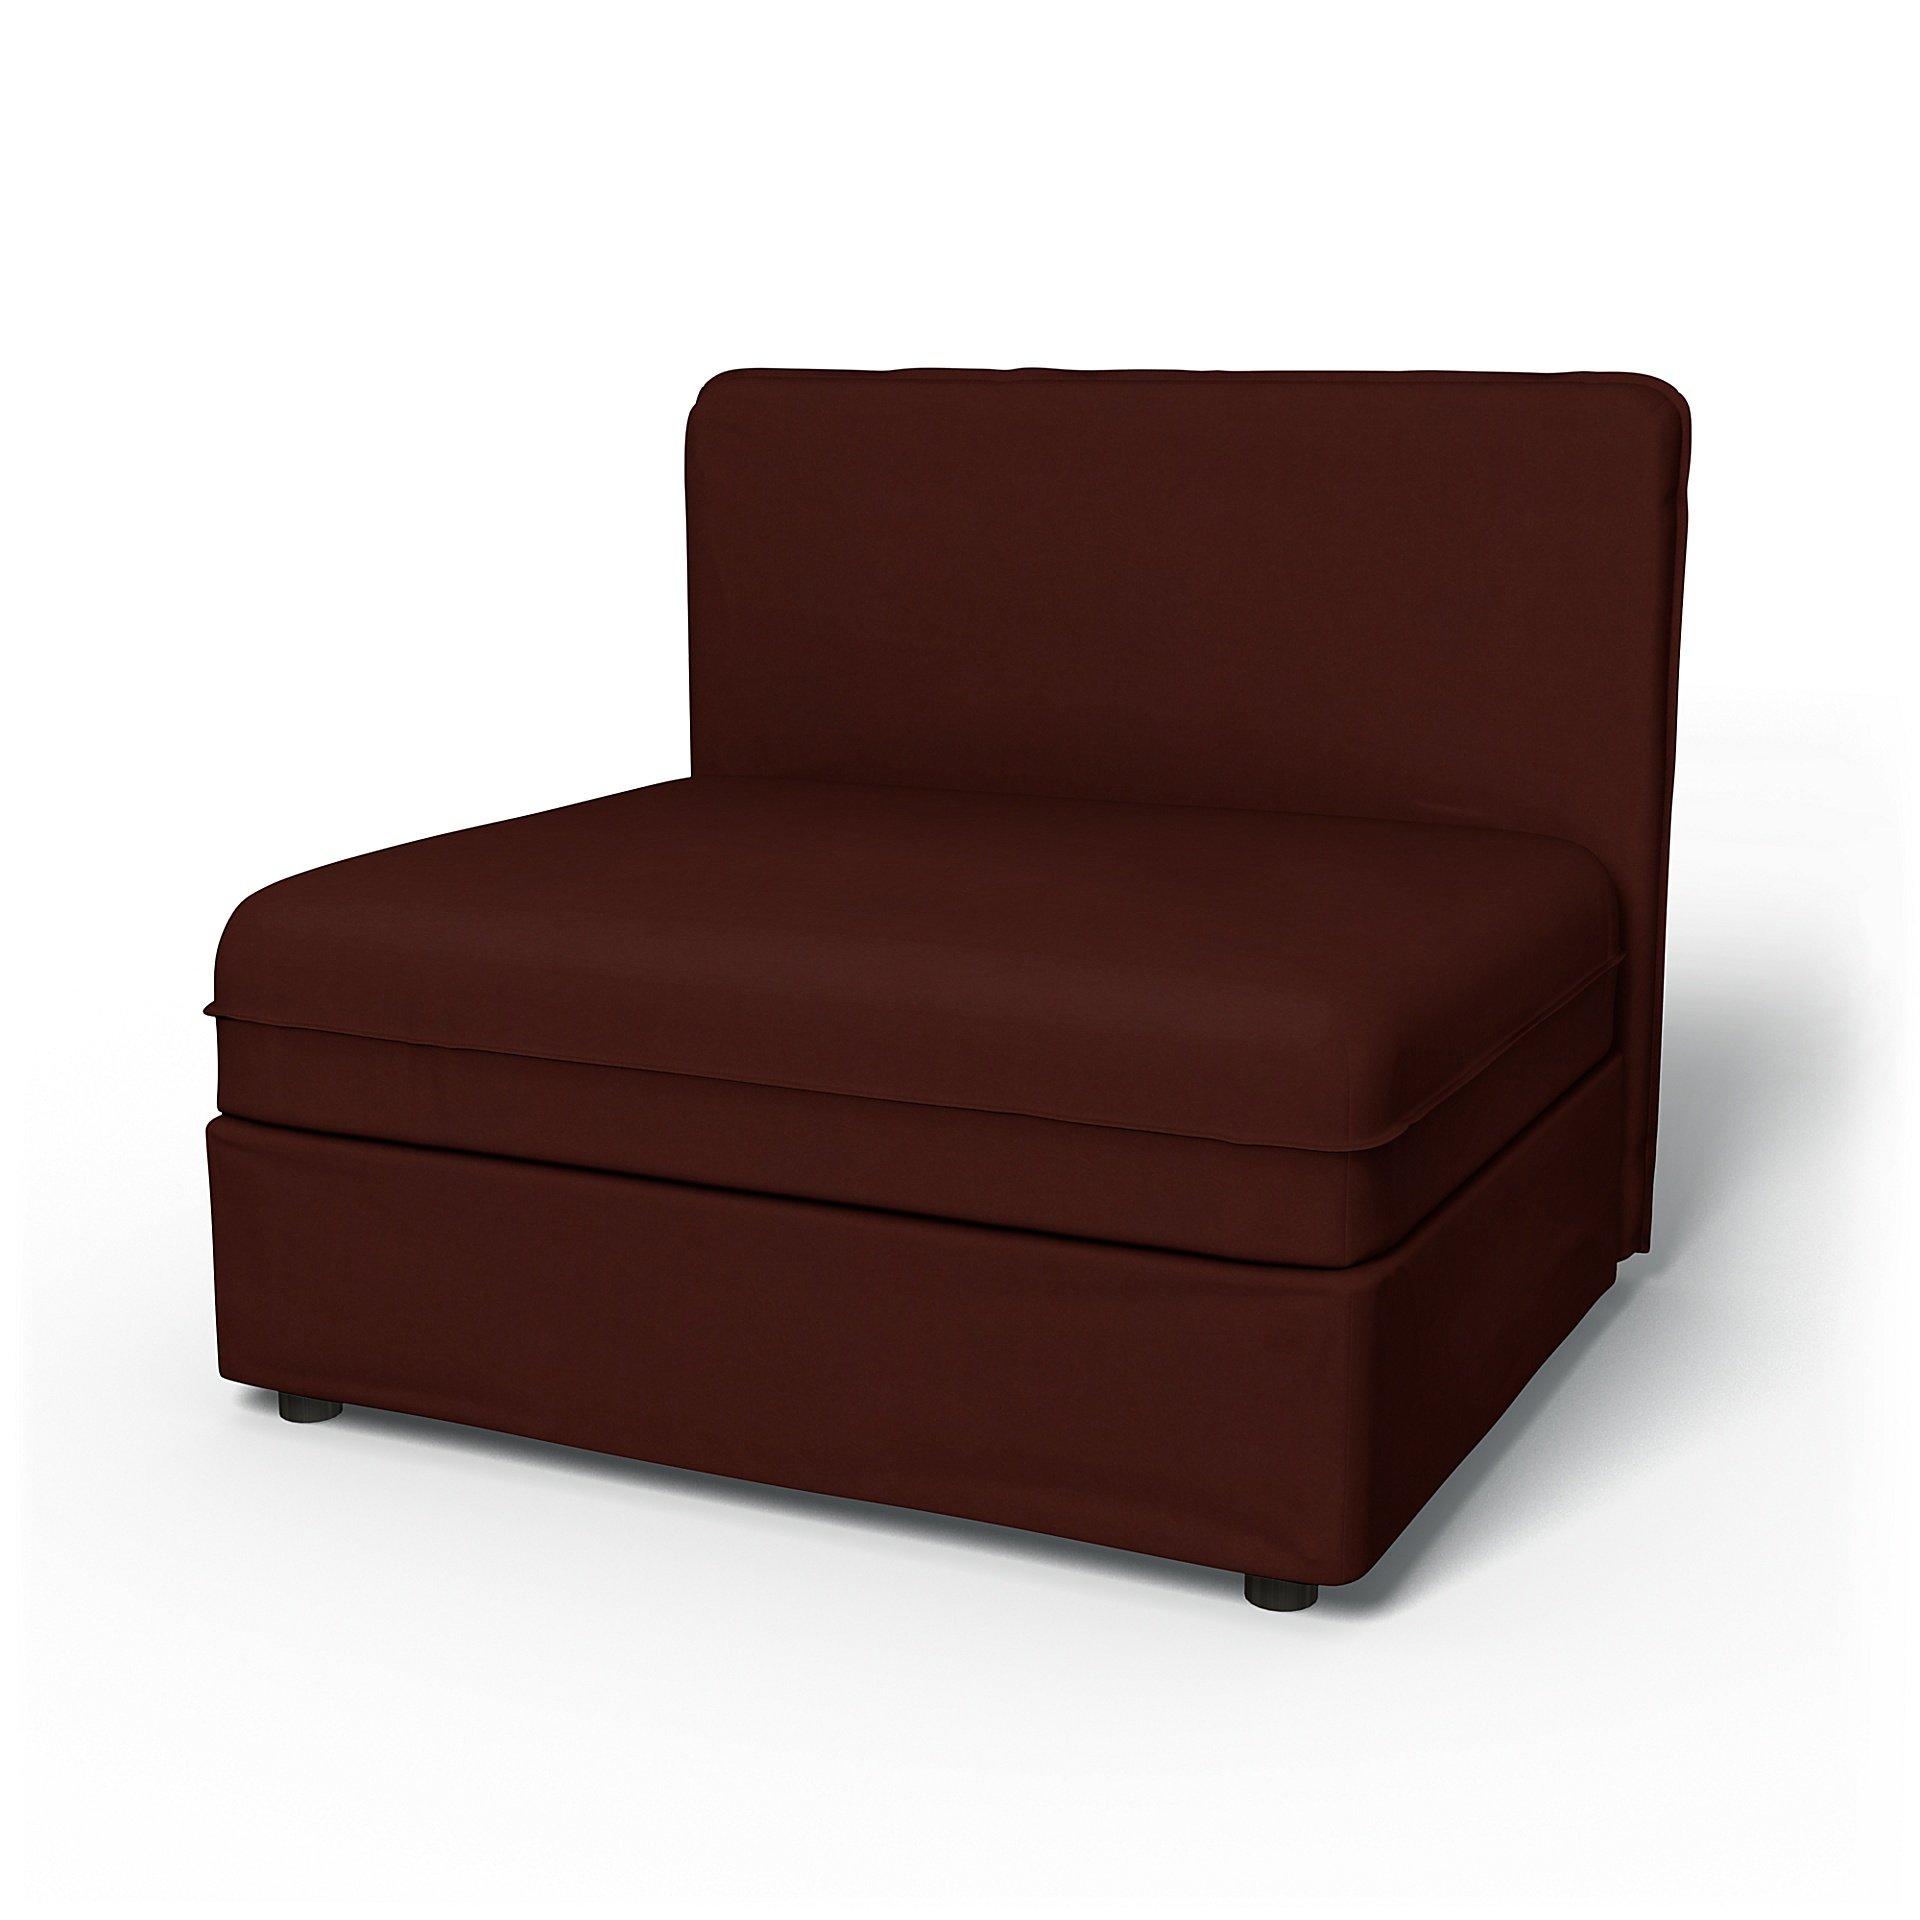 IKEA - Vallentuna Seat Module with Low Back Cover 100x80cm 39x32in, Ground Coffee, Velvet - Bemz